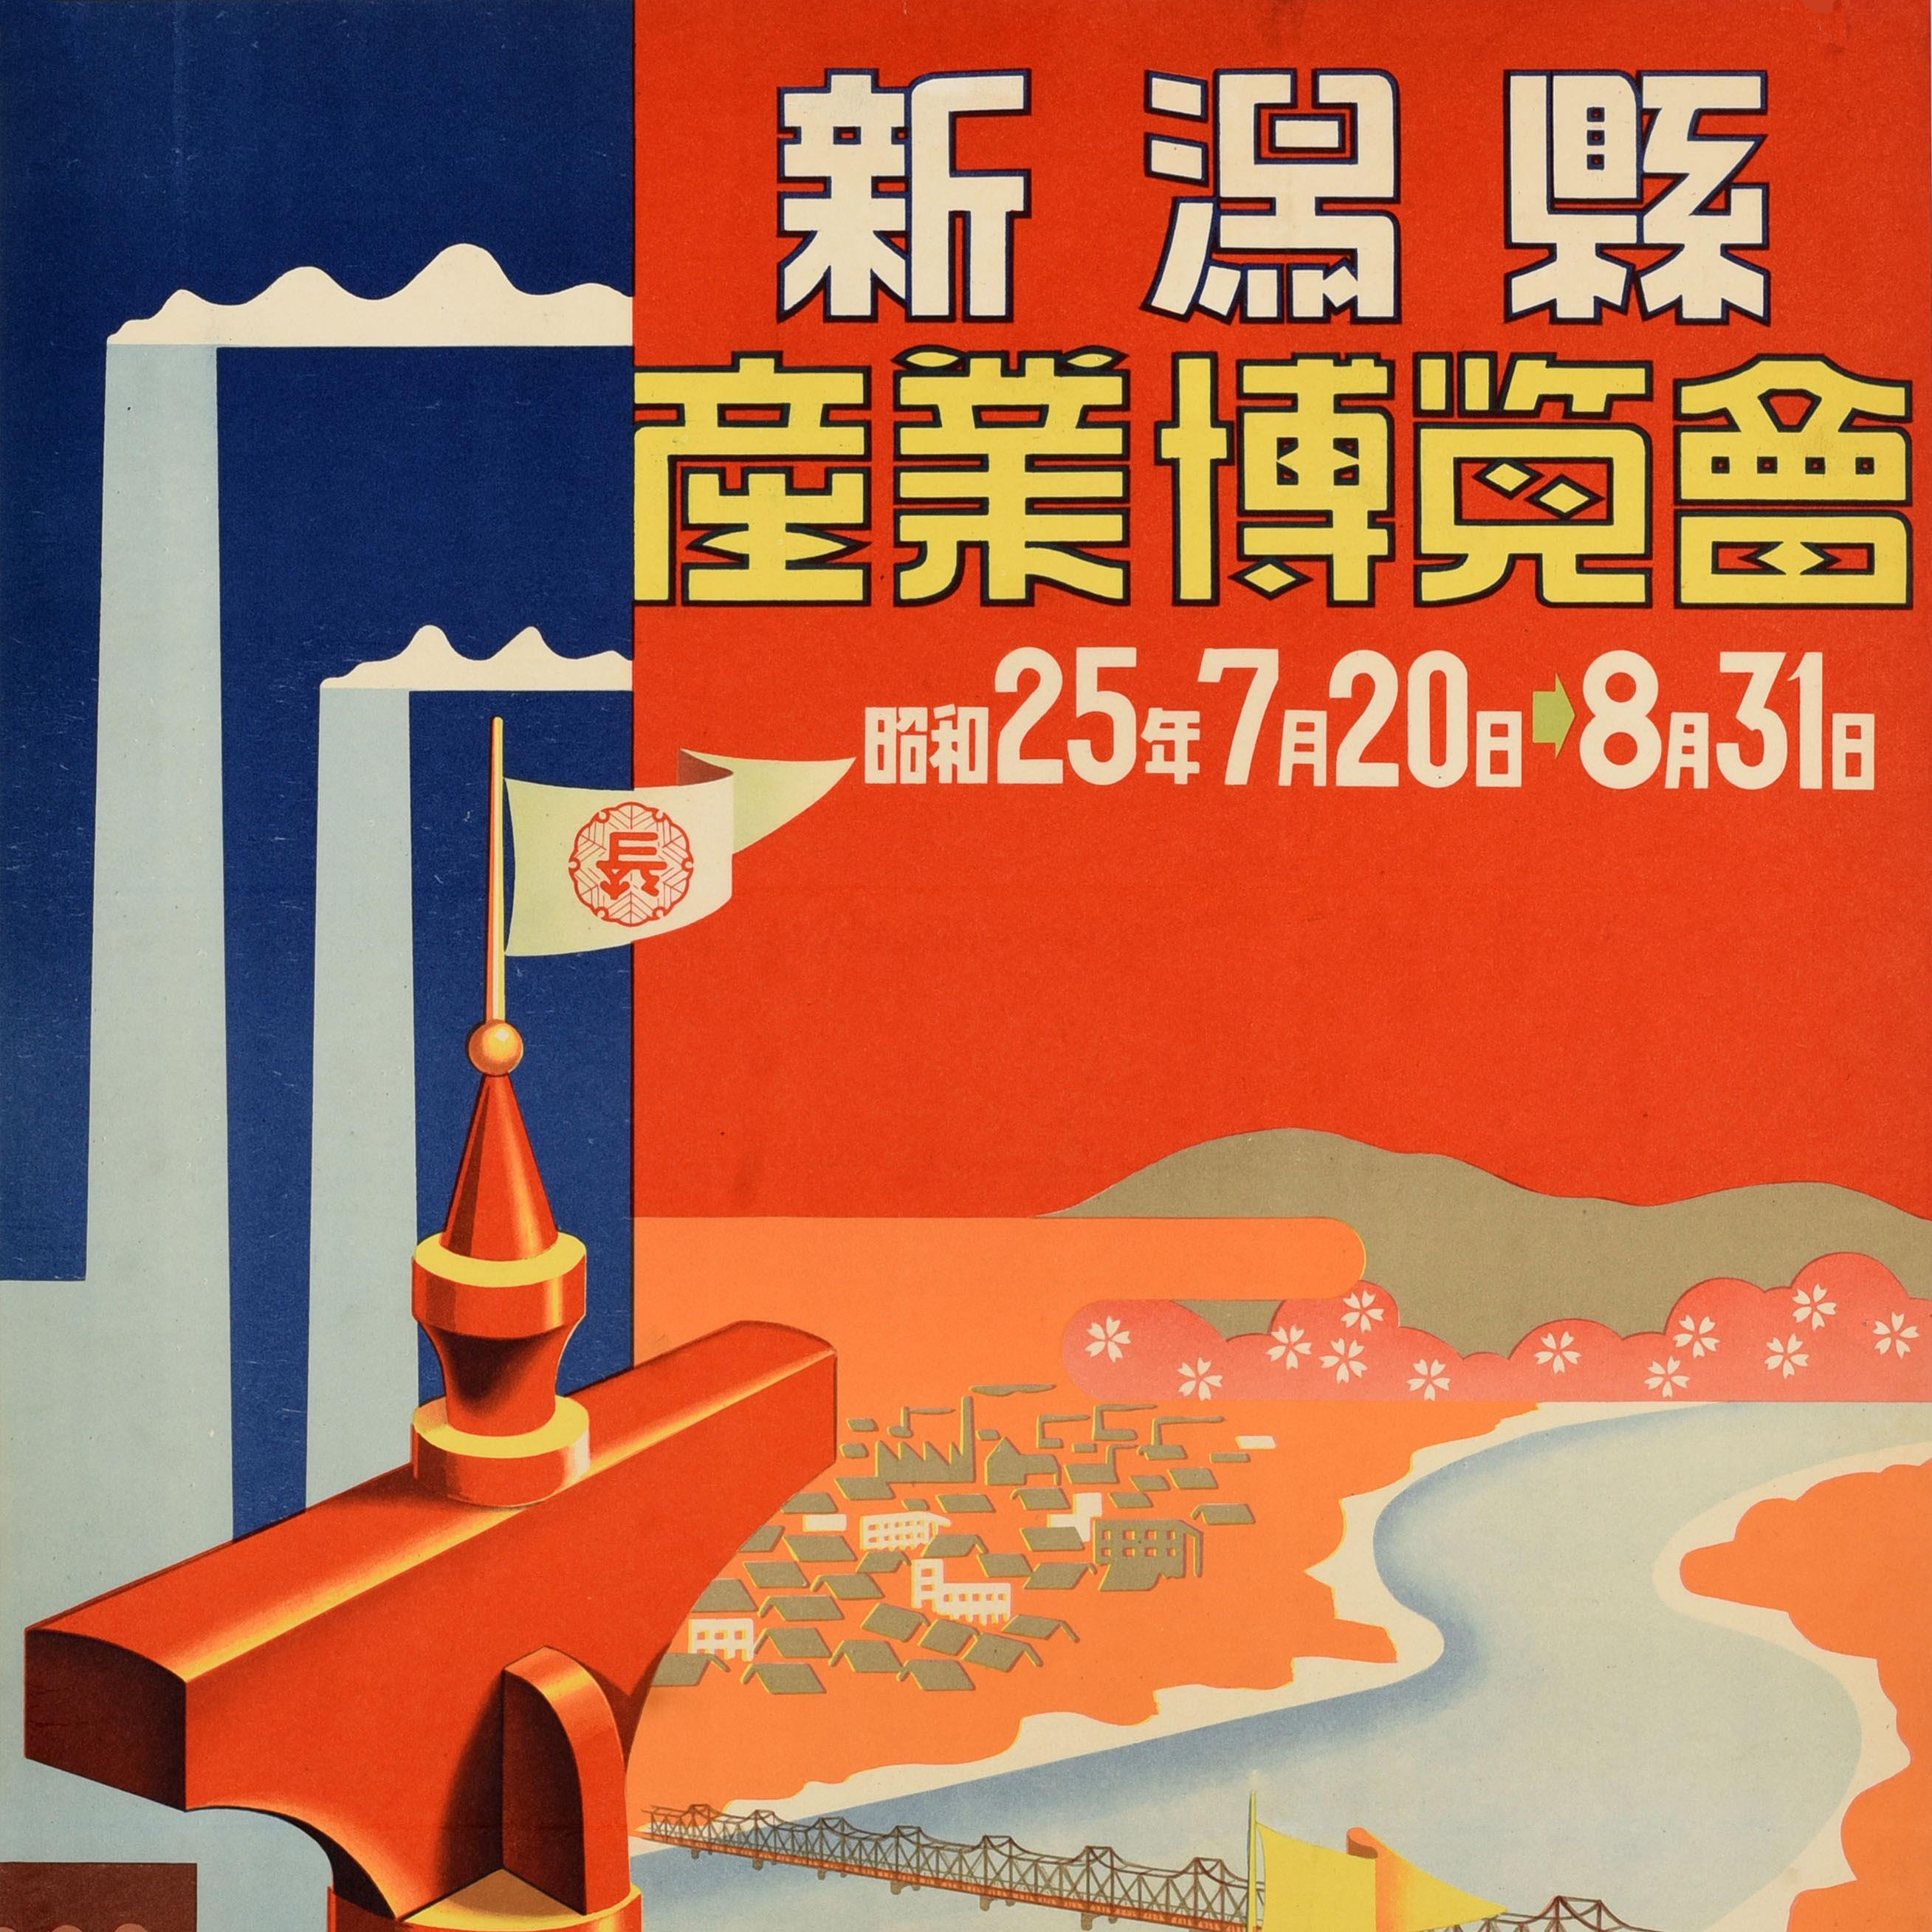 Japanese Original Vintage Asia Travel Advertising Poster Niigata Industry Expo Japan For Sale